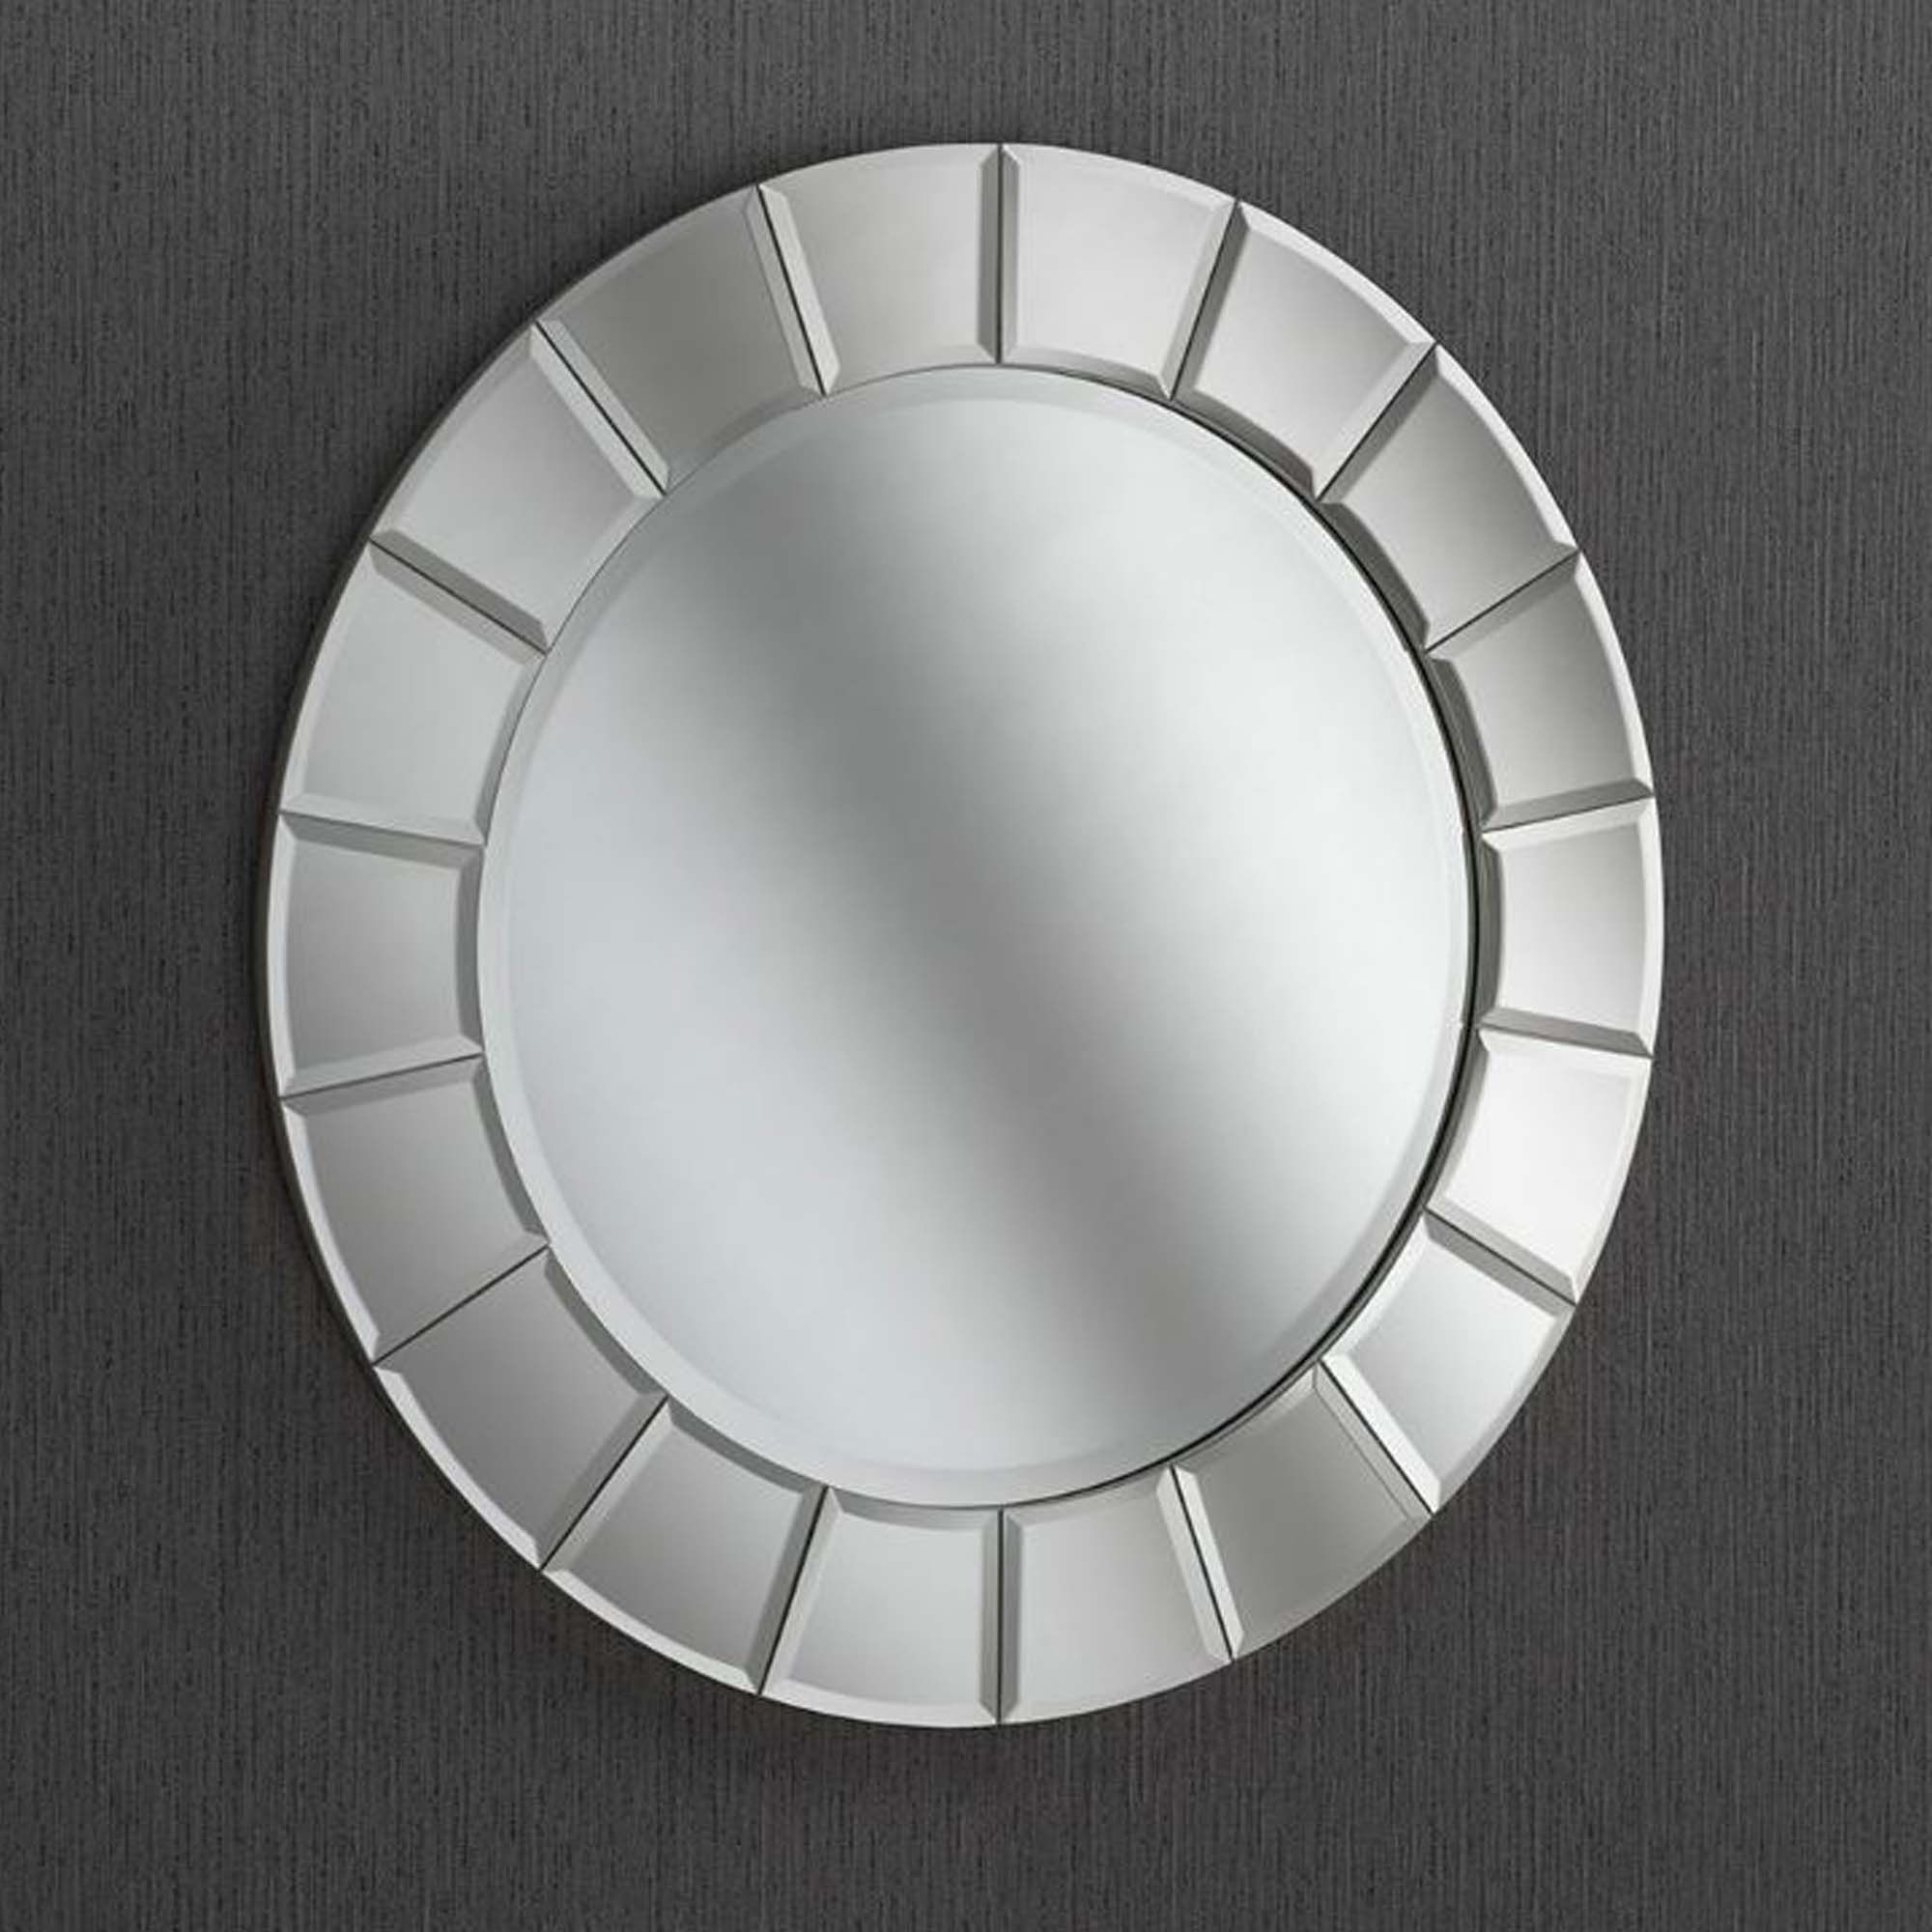 Round Mirrored Wall Mirror Beveled Details | Mirrored Mirrors Within Round Grid Wall Mirrors (View 3 of 15)